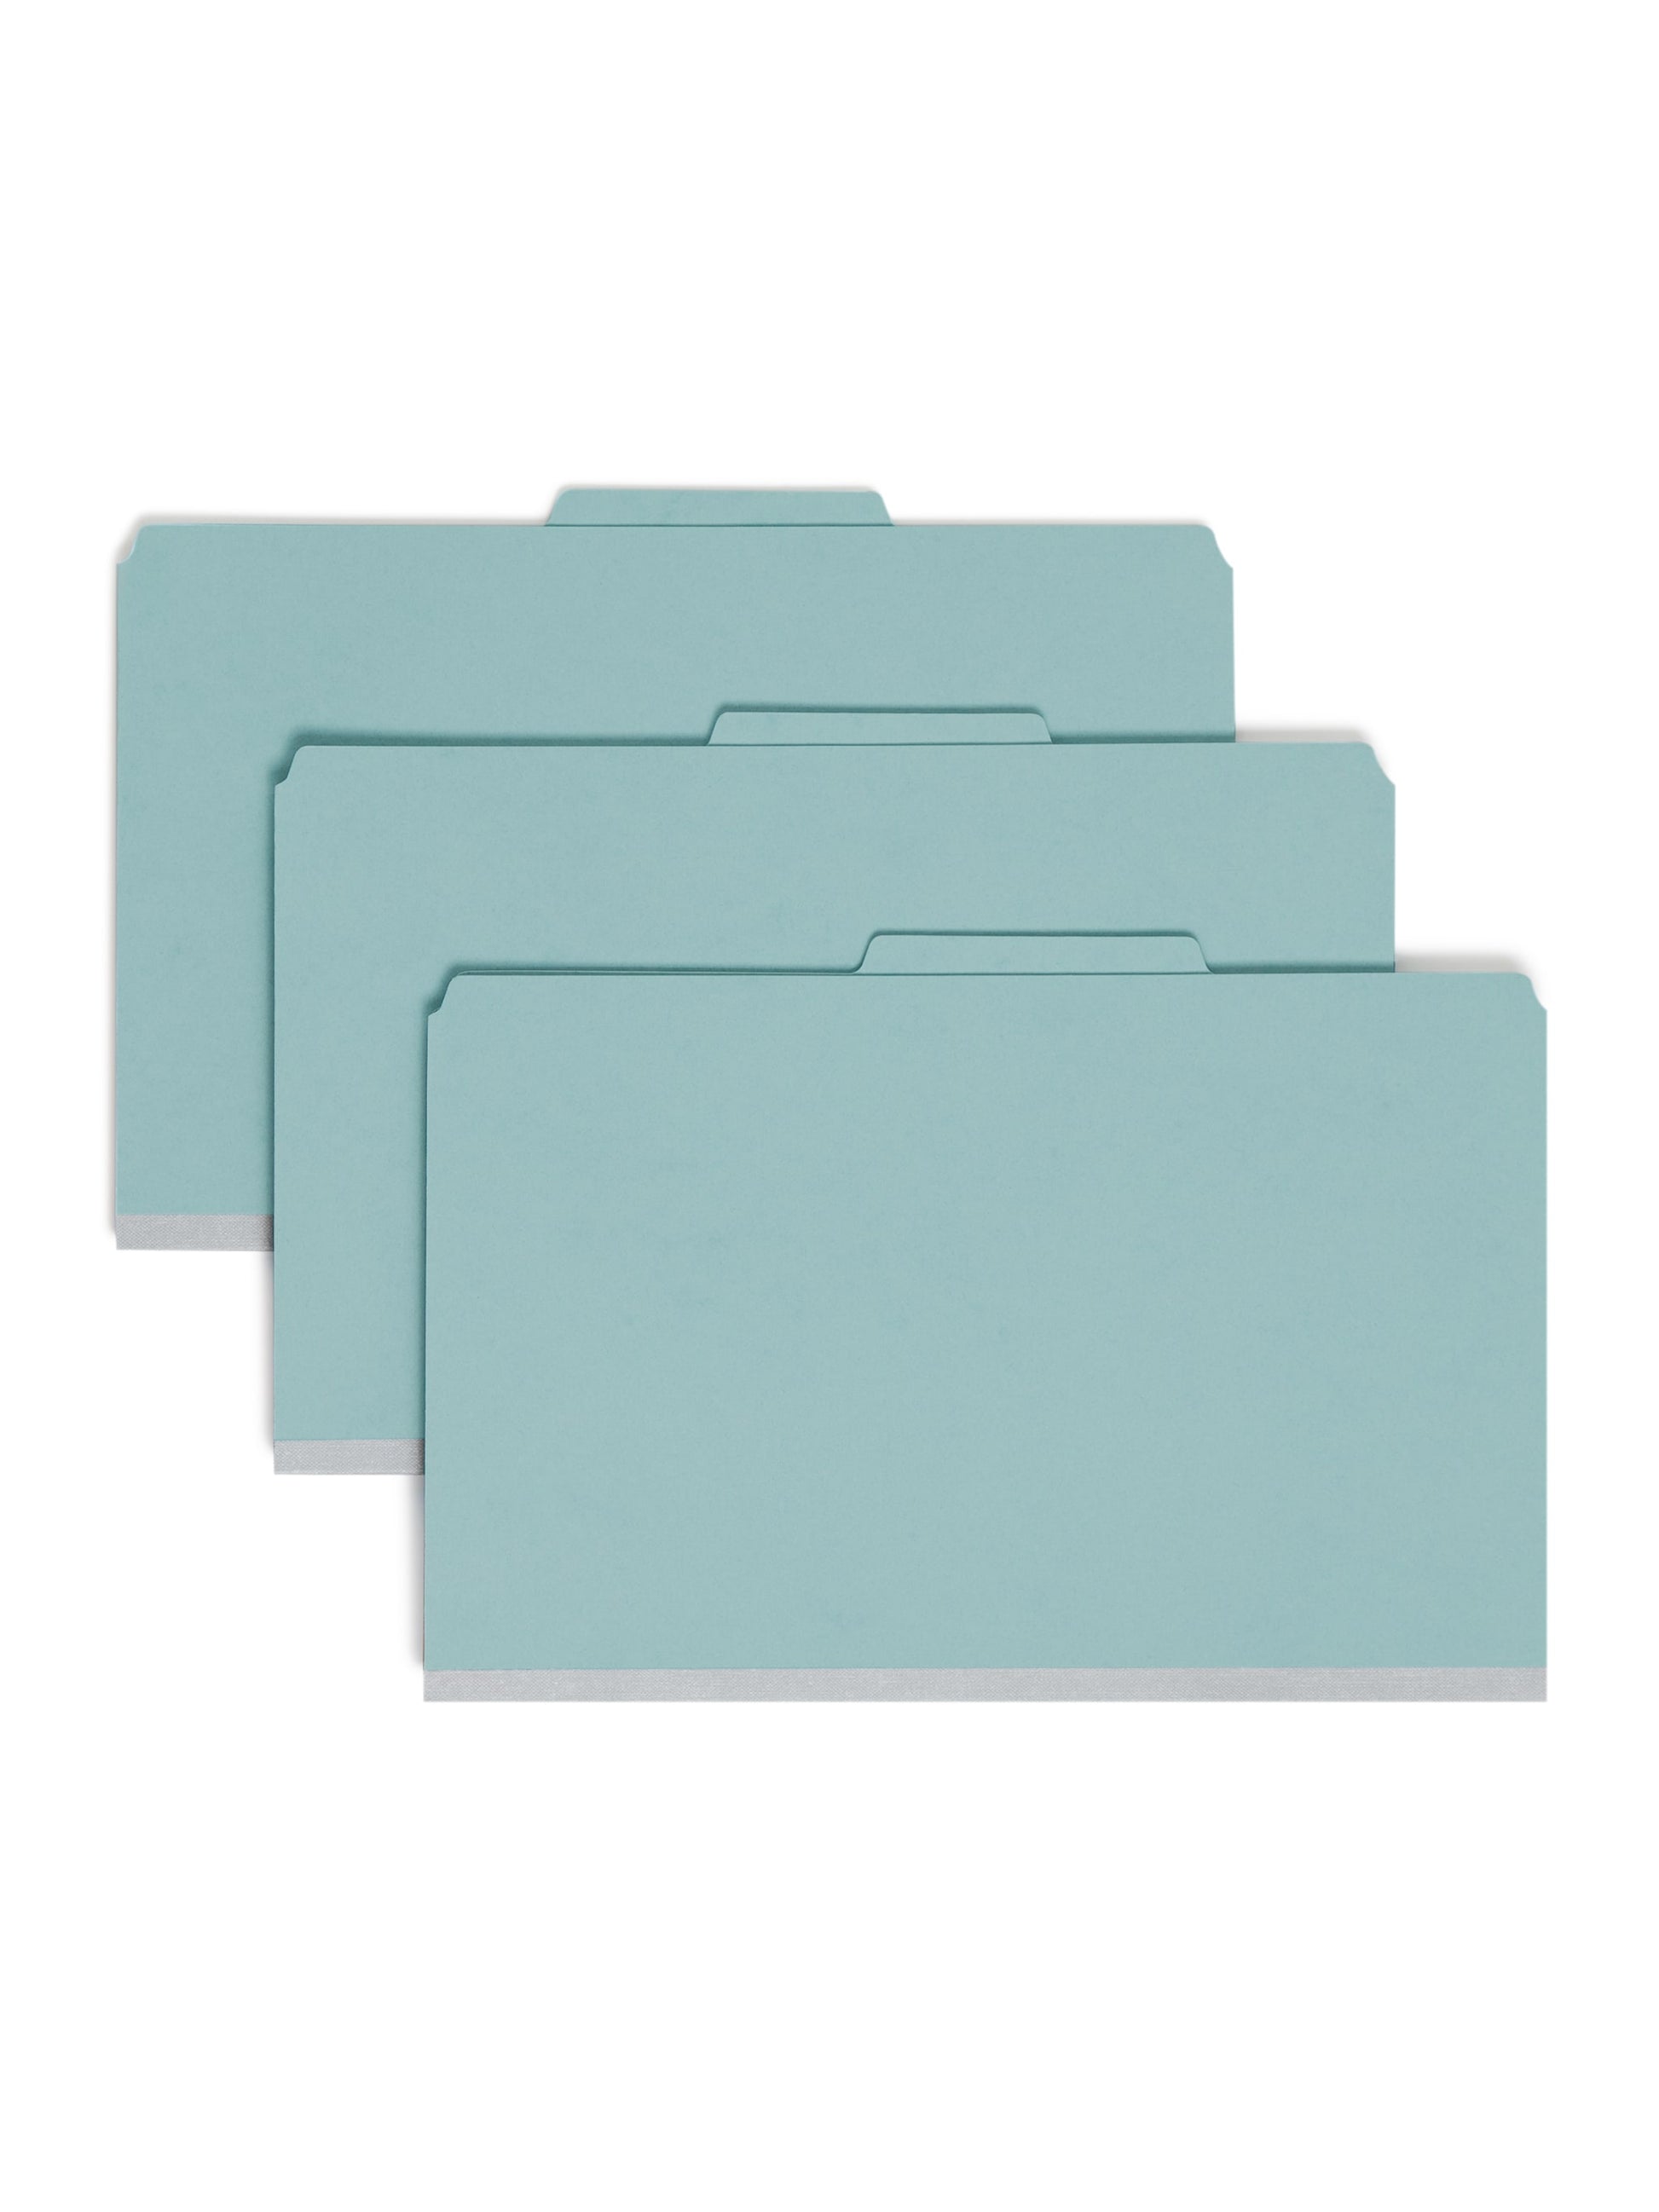 SafeSHIELD® Pressboard Classification File Folders with Pocket Dividers, Blue Color, Legal Size, 